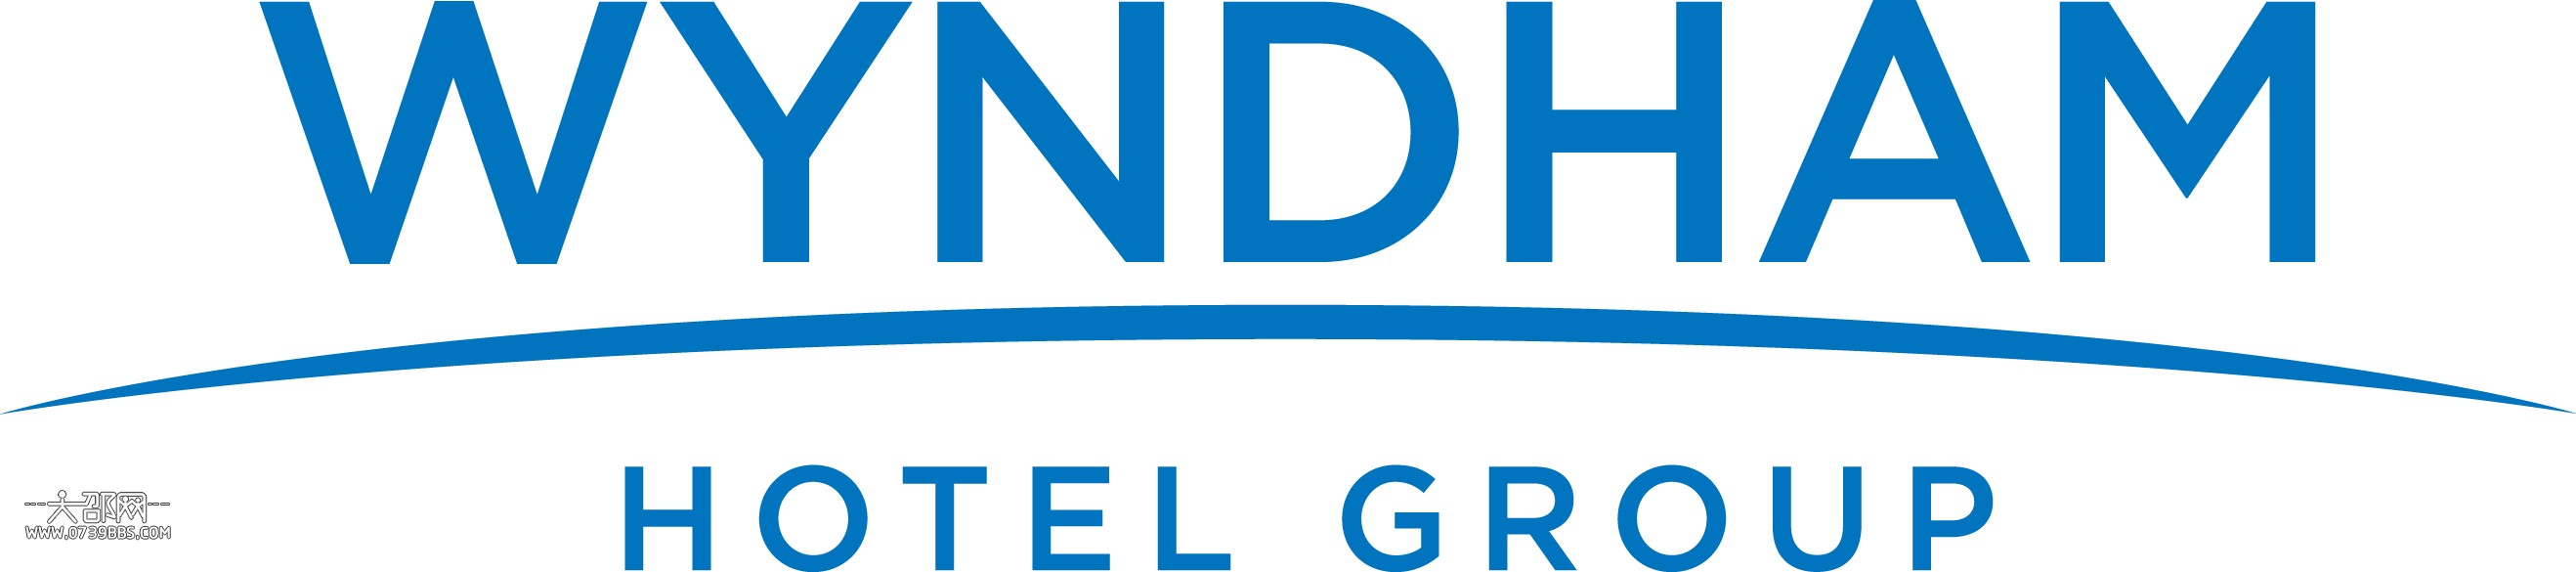 WHG Company Logo (Full Color).jpg